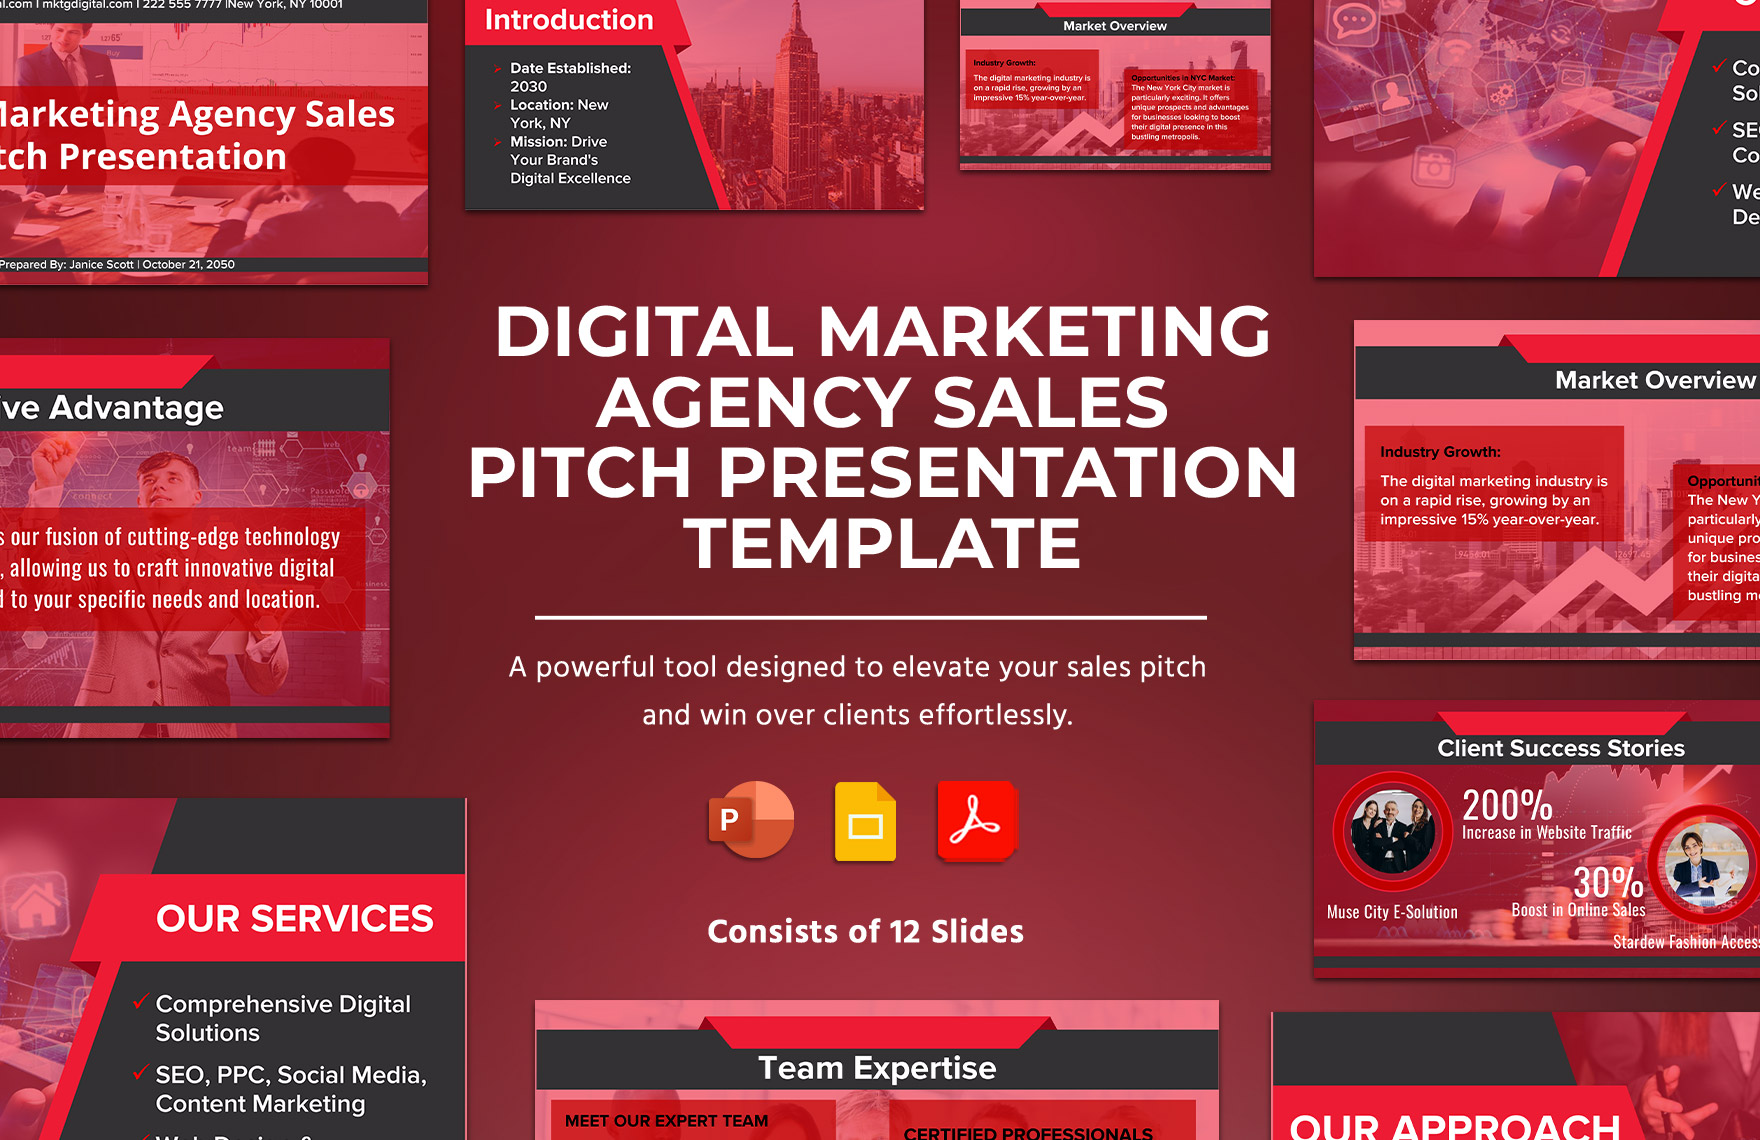 Digital Marketing Agency Sales Pitch Presentation Template